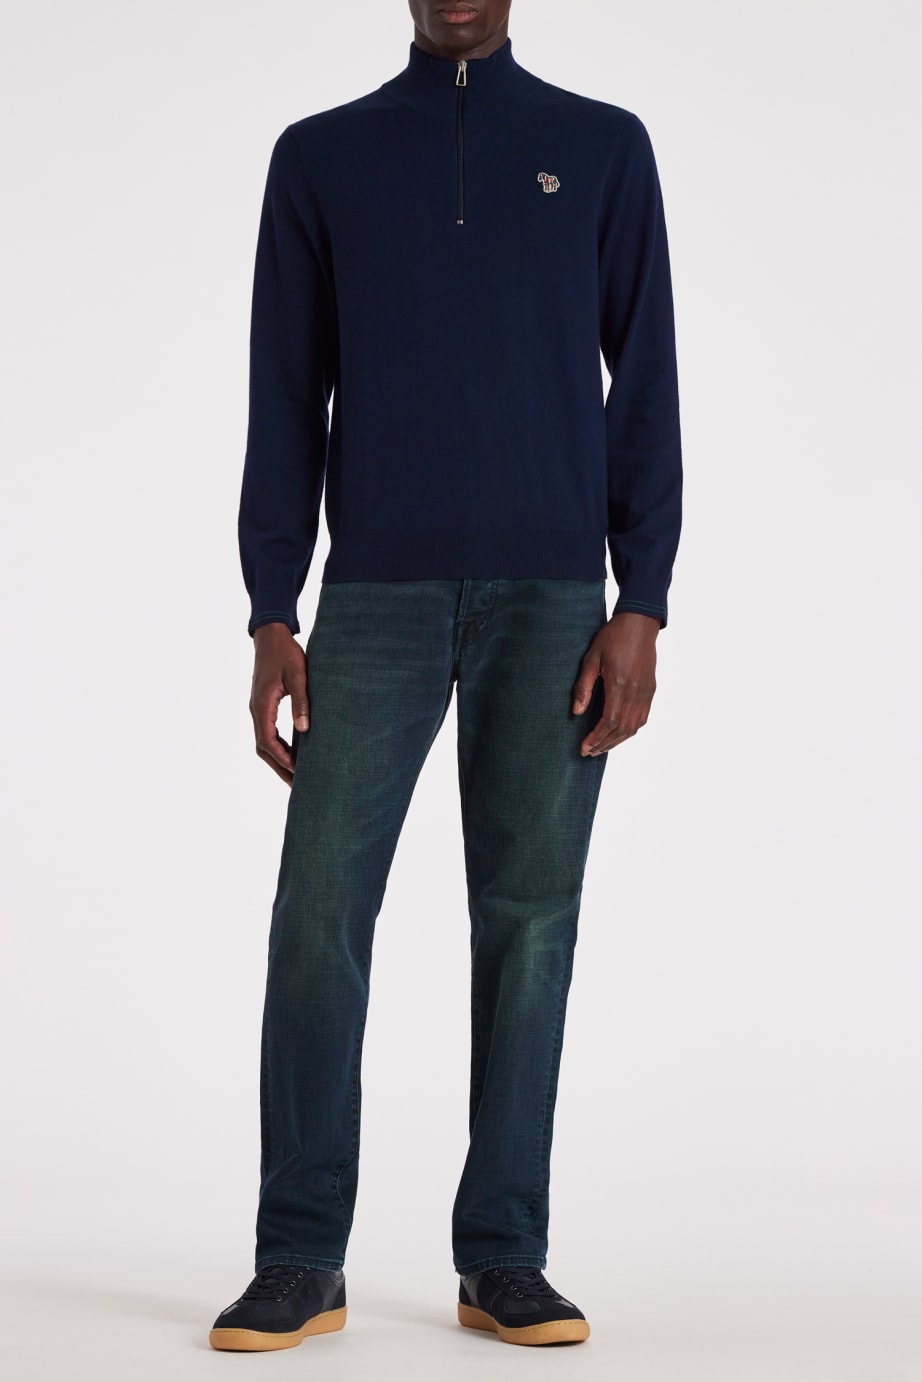 Model View - Navy Cotton-Blend Half Zip Zebra Logo Sweater Paul Smith